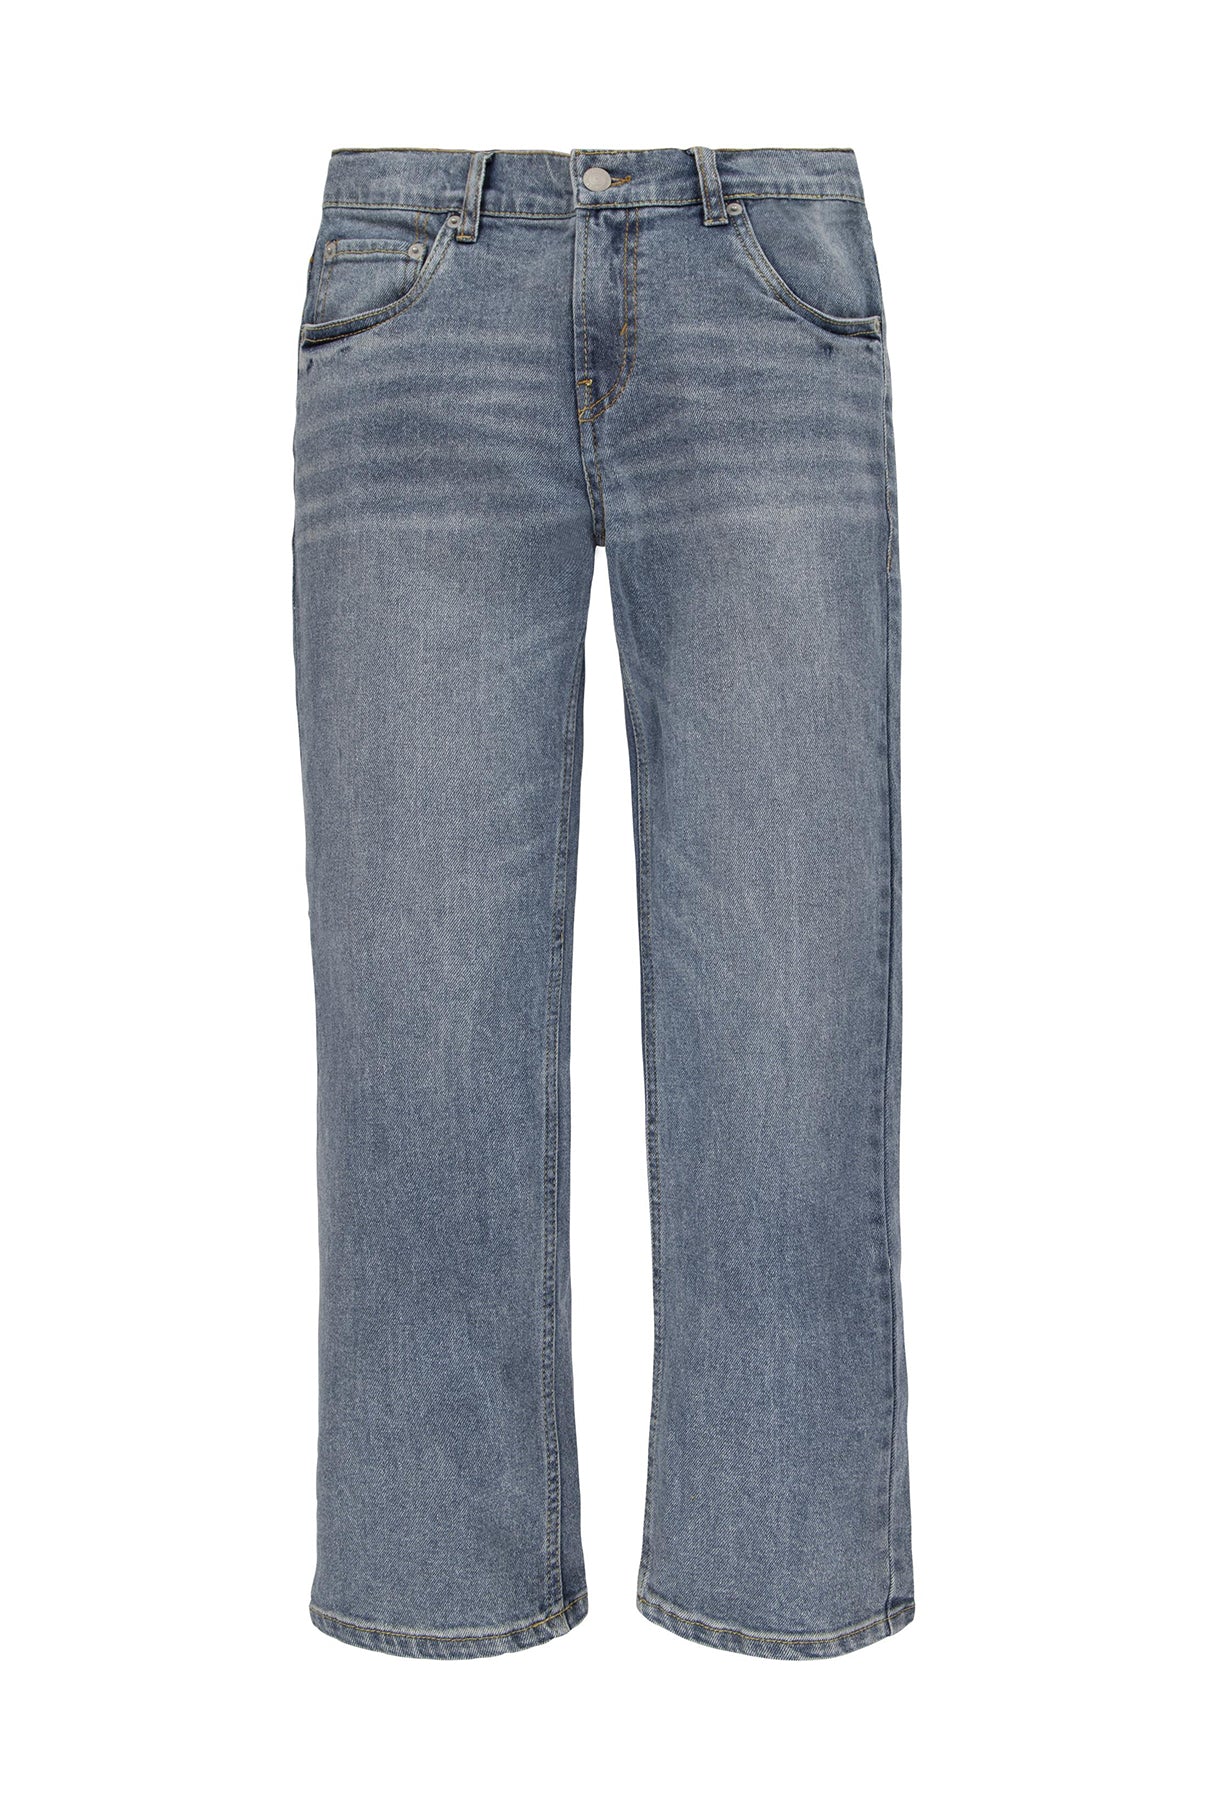 LEVIS BOY Jeans 551Z Authentic Straight